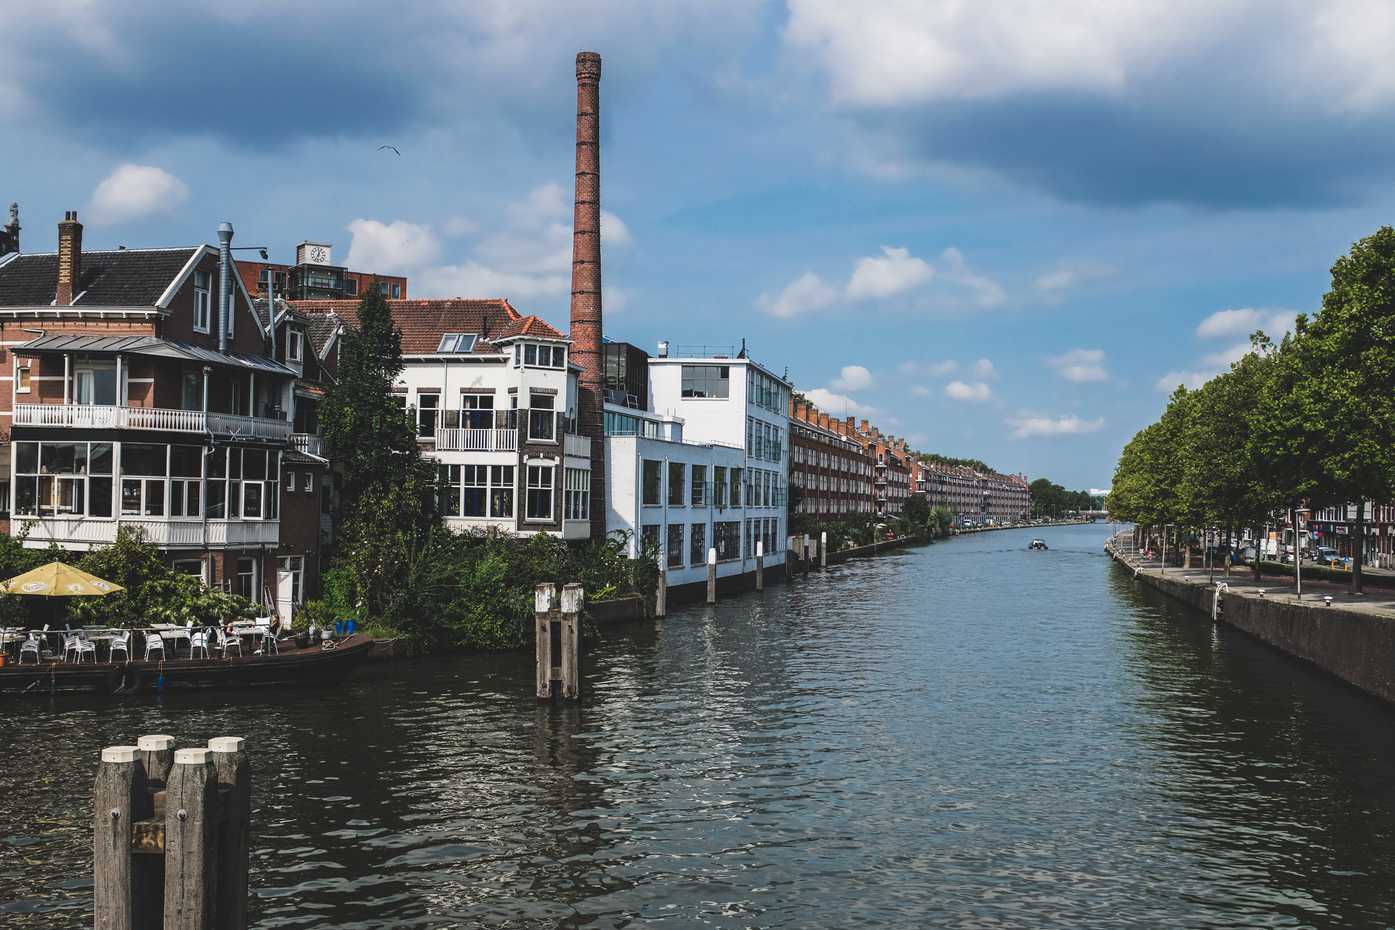 A factory alongside a canal